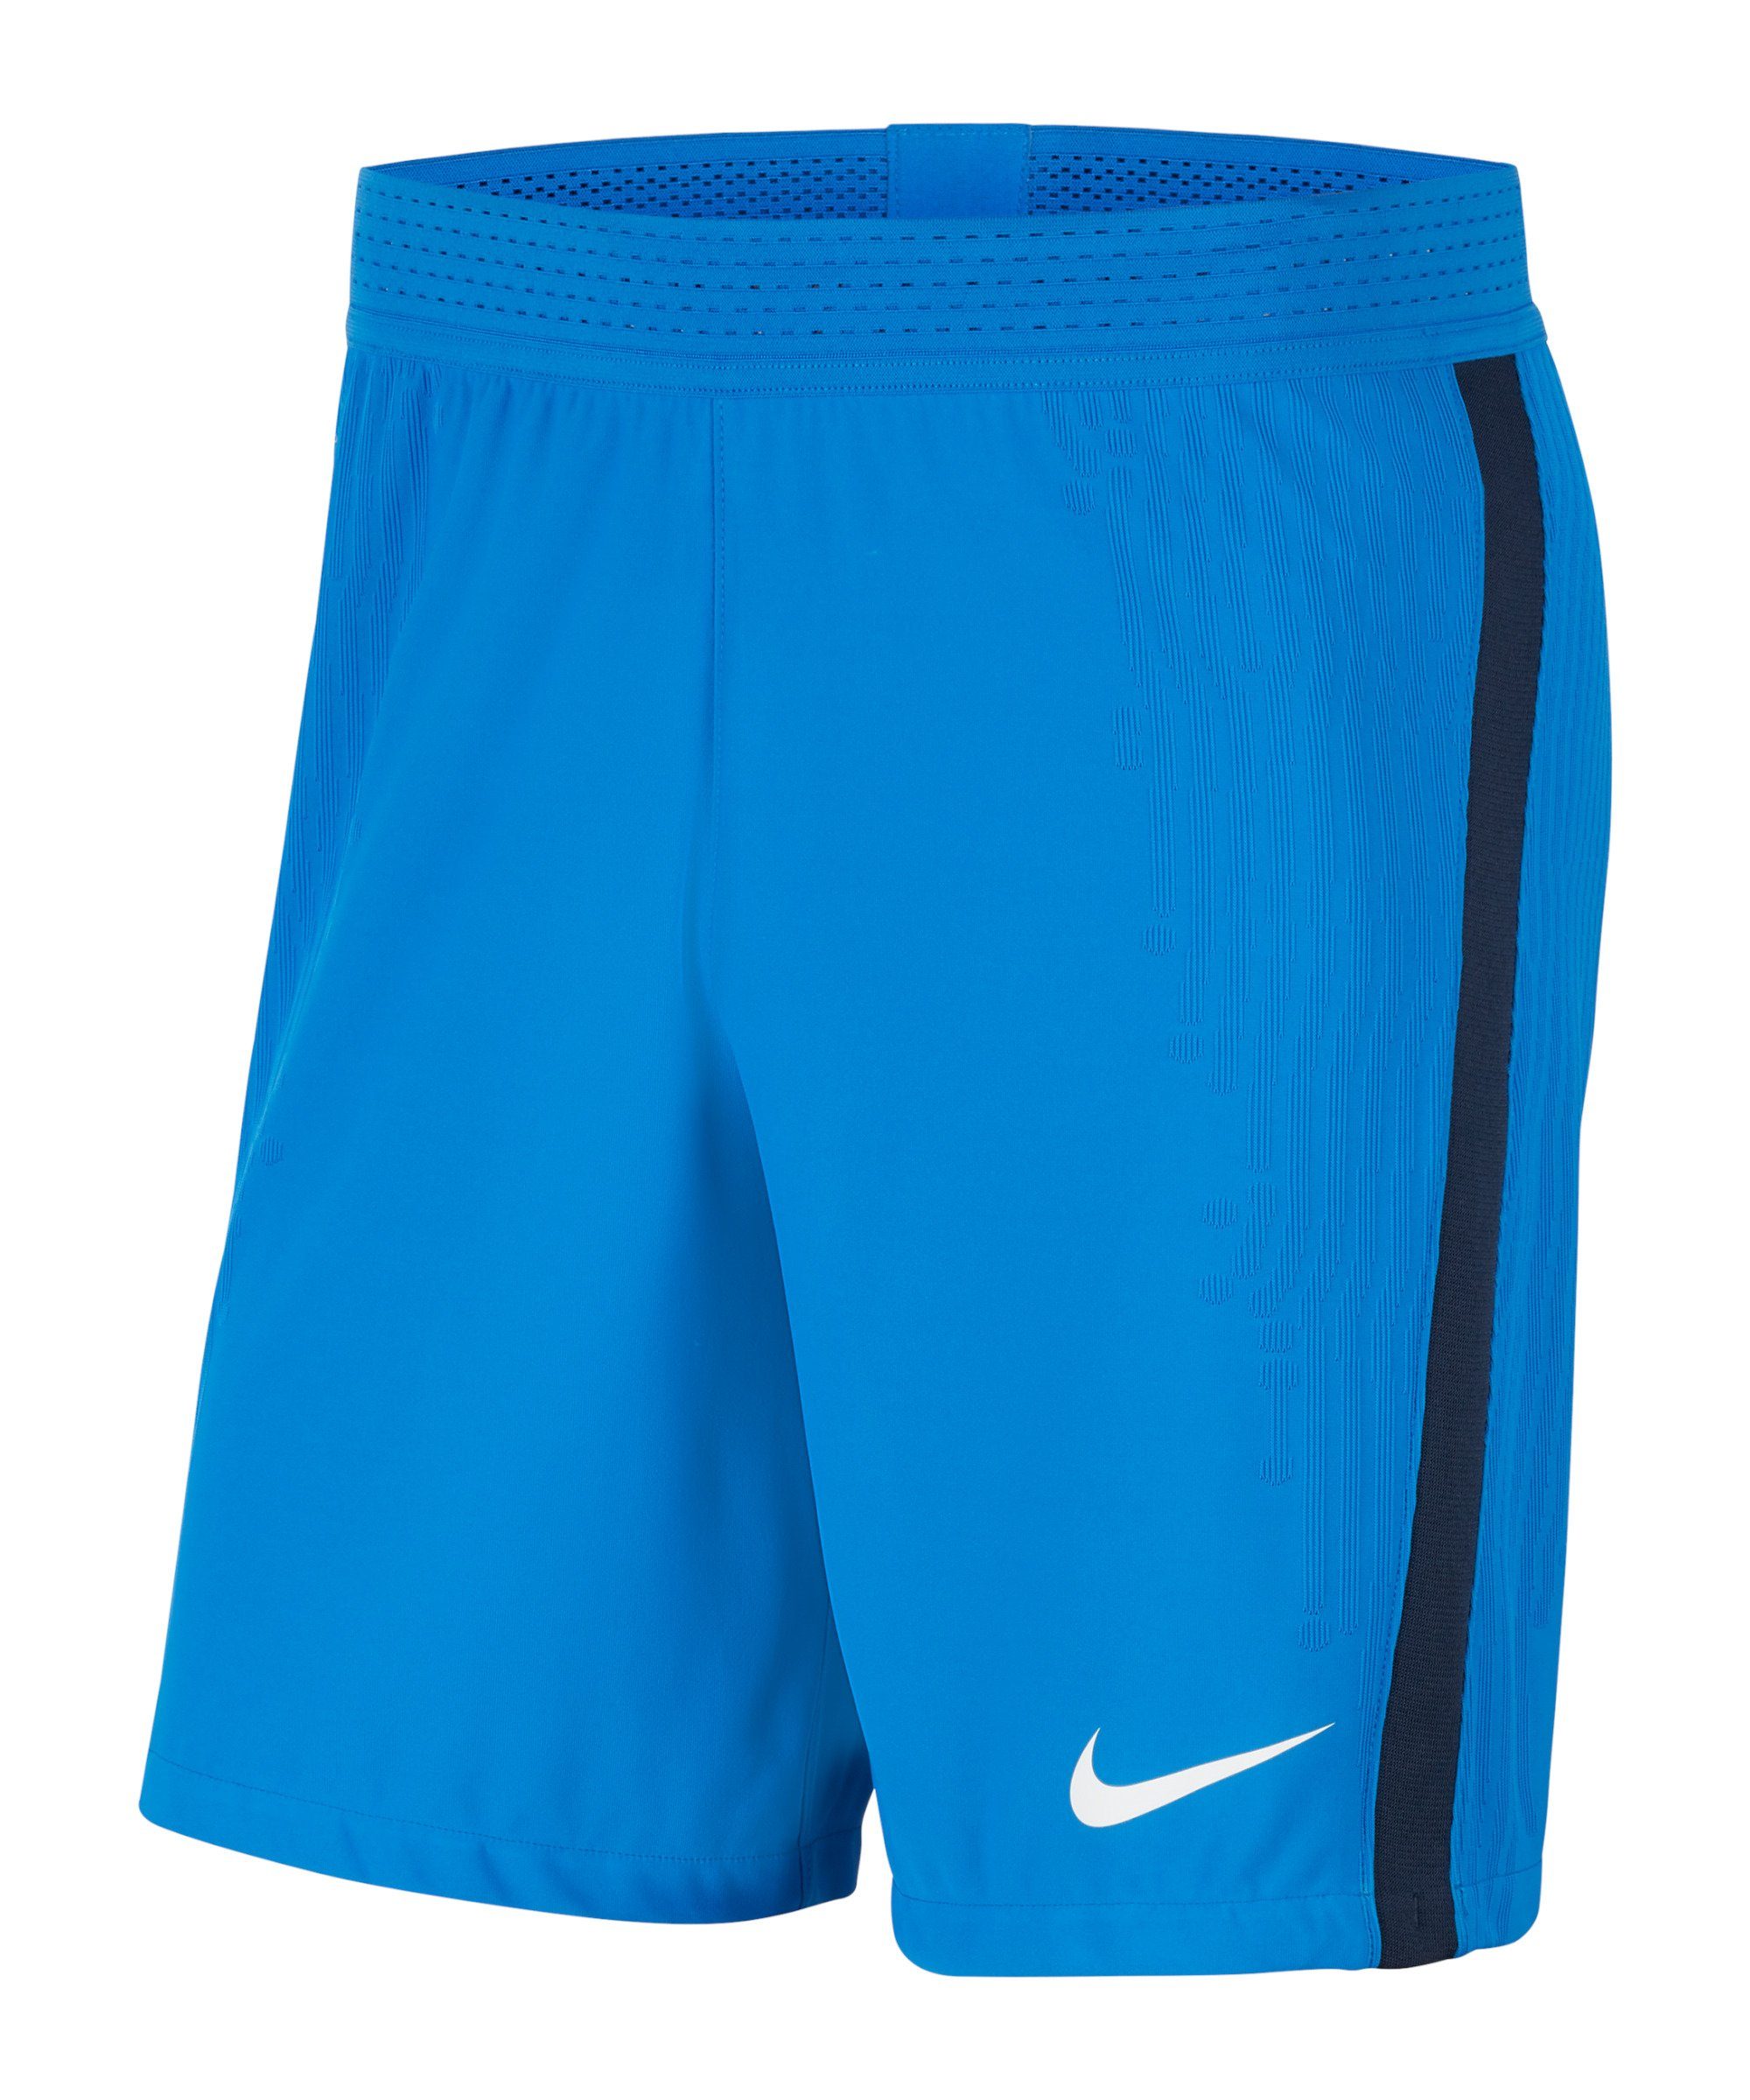 III Nike Short Knit blauweiss Vapor Sporthose